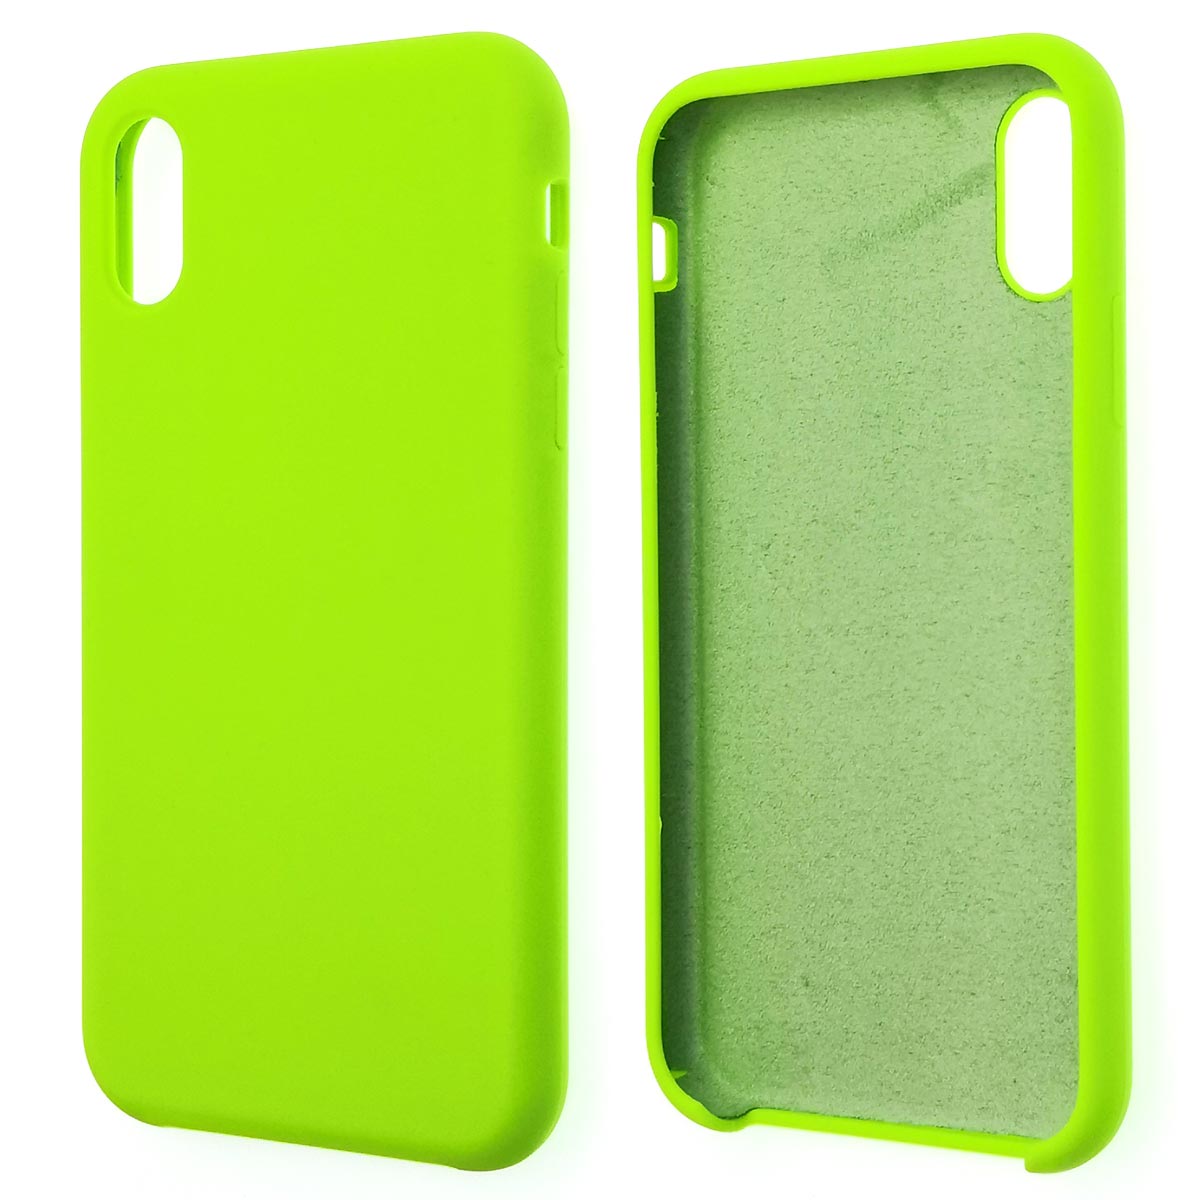 Чехол накладка Silicon Case для APPLE iPhone XR, силикон, бархат, цвет ярко зеленый